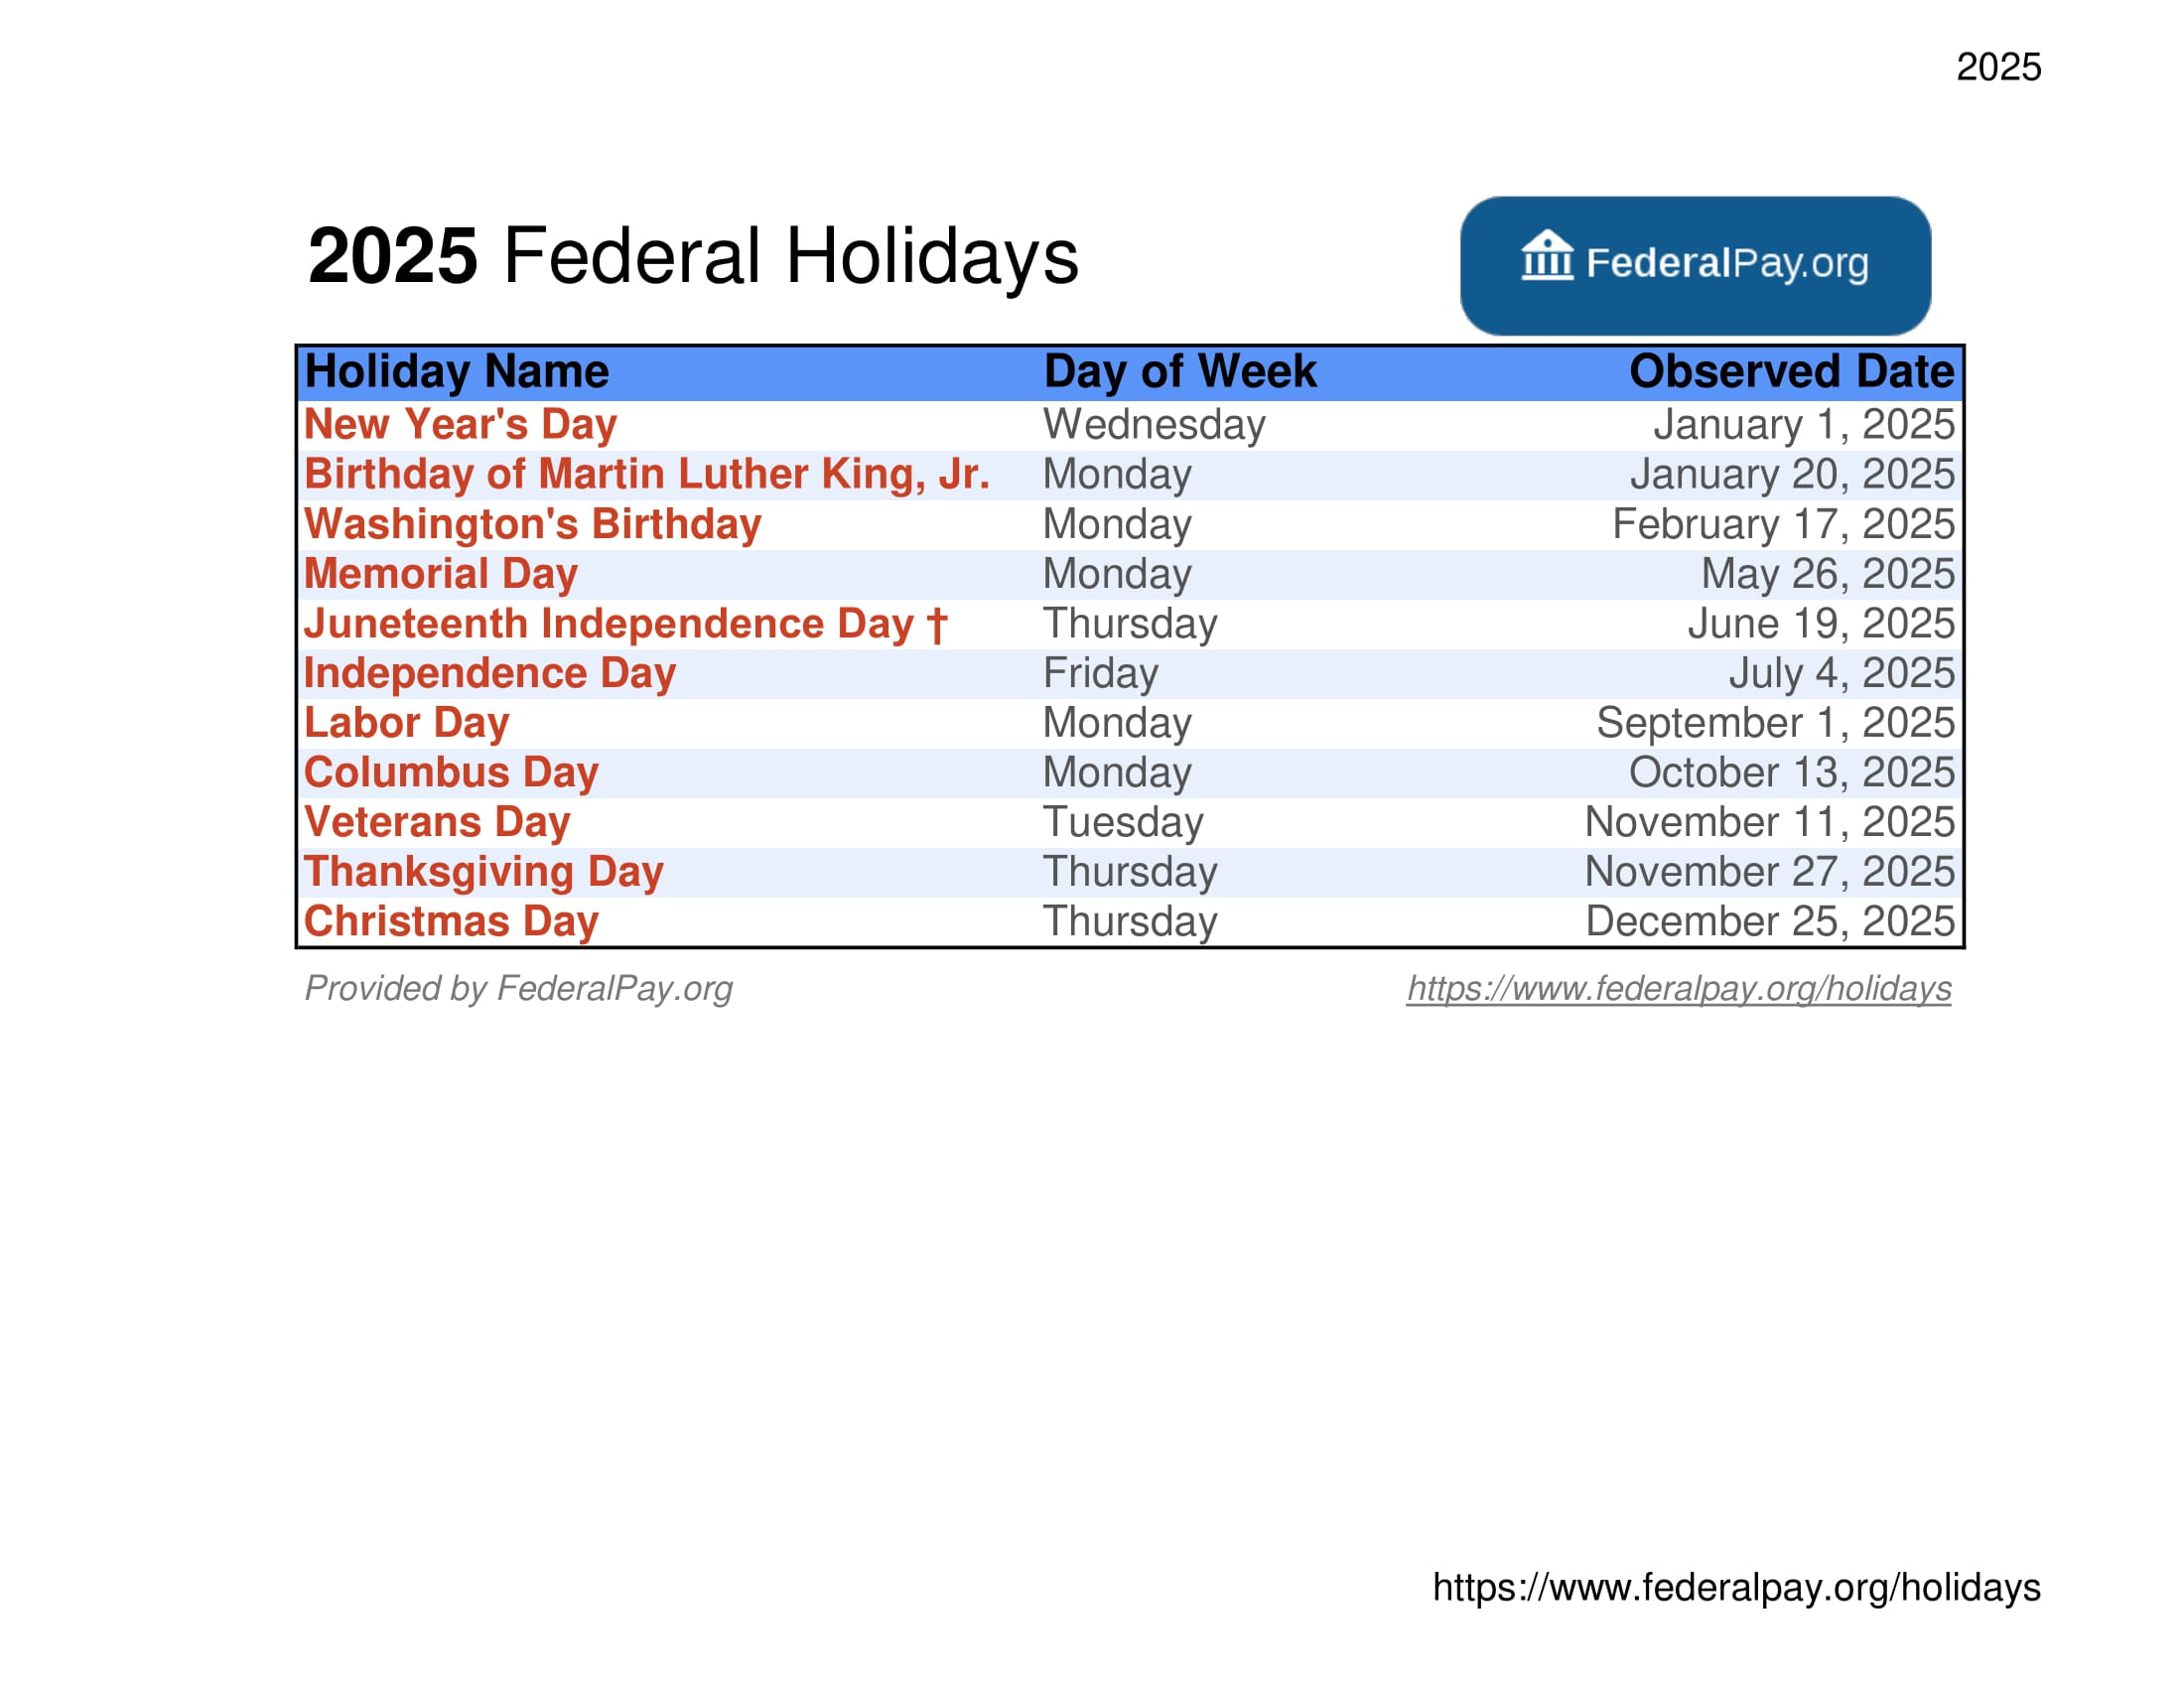 2025 Major Holiday Calendar - amii ninetta